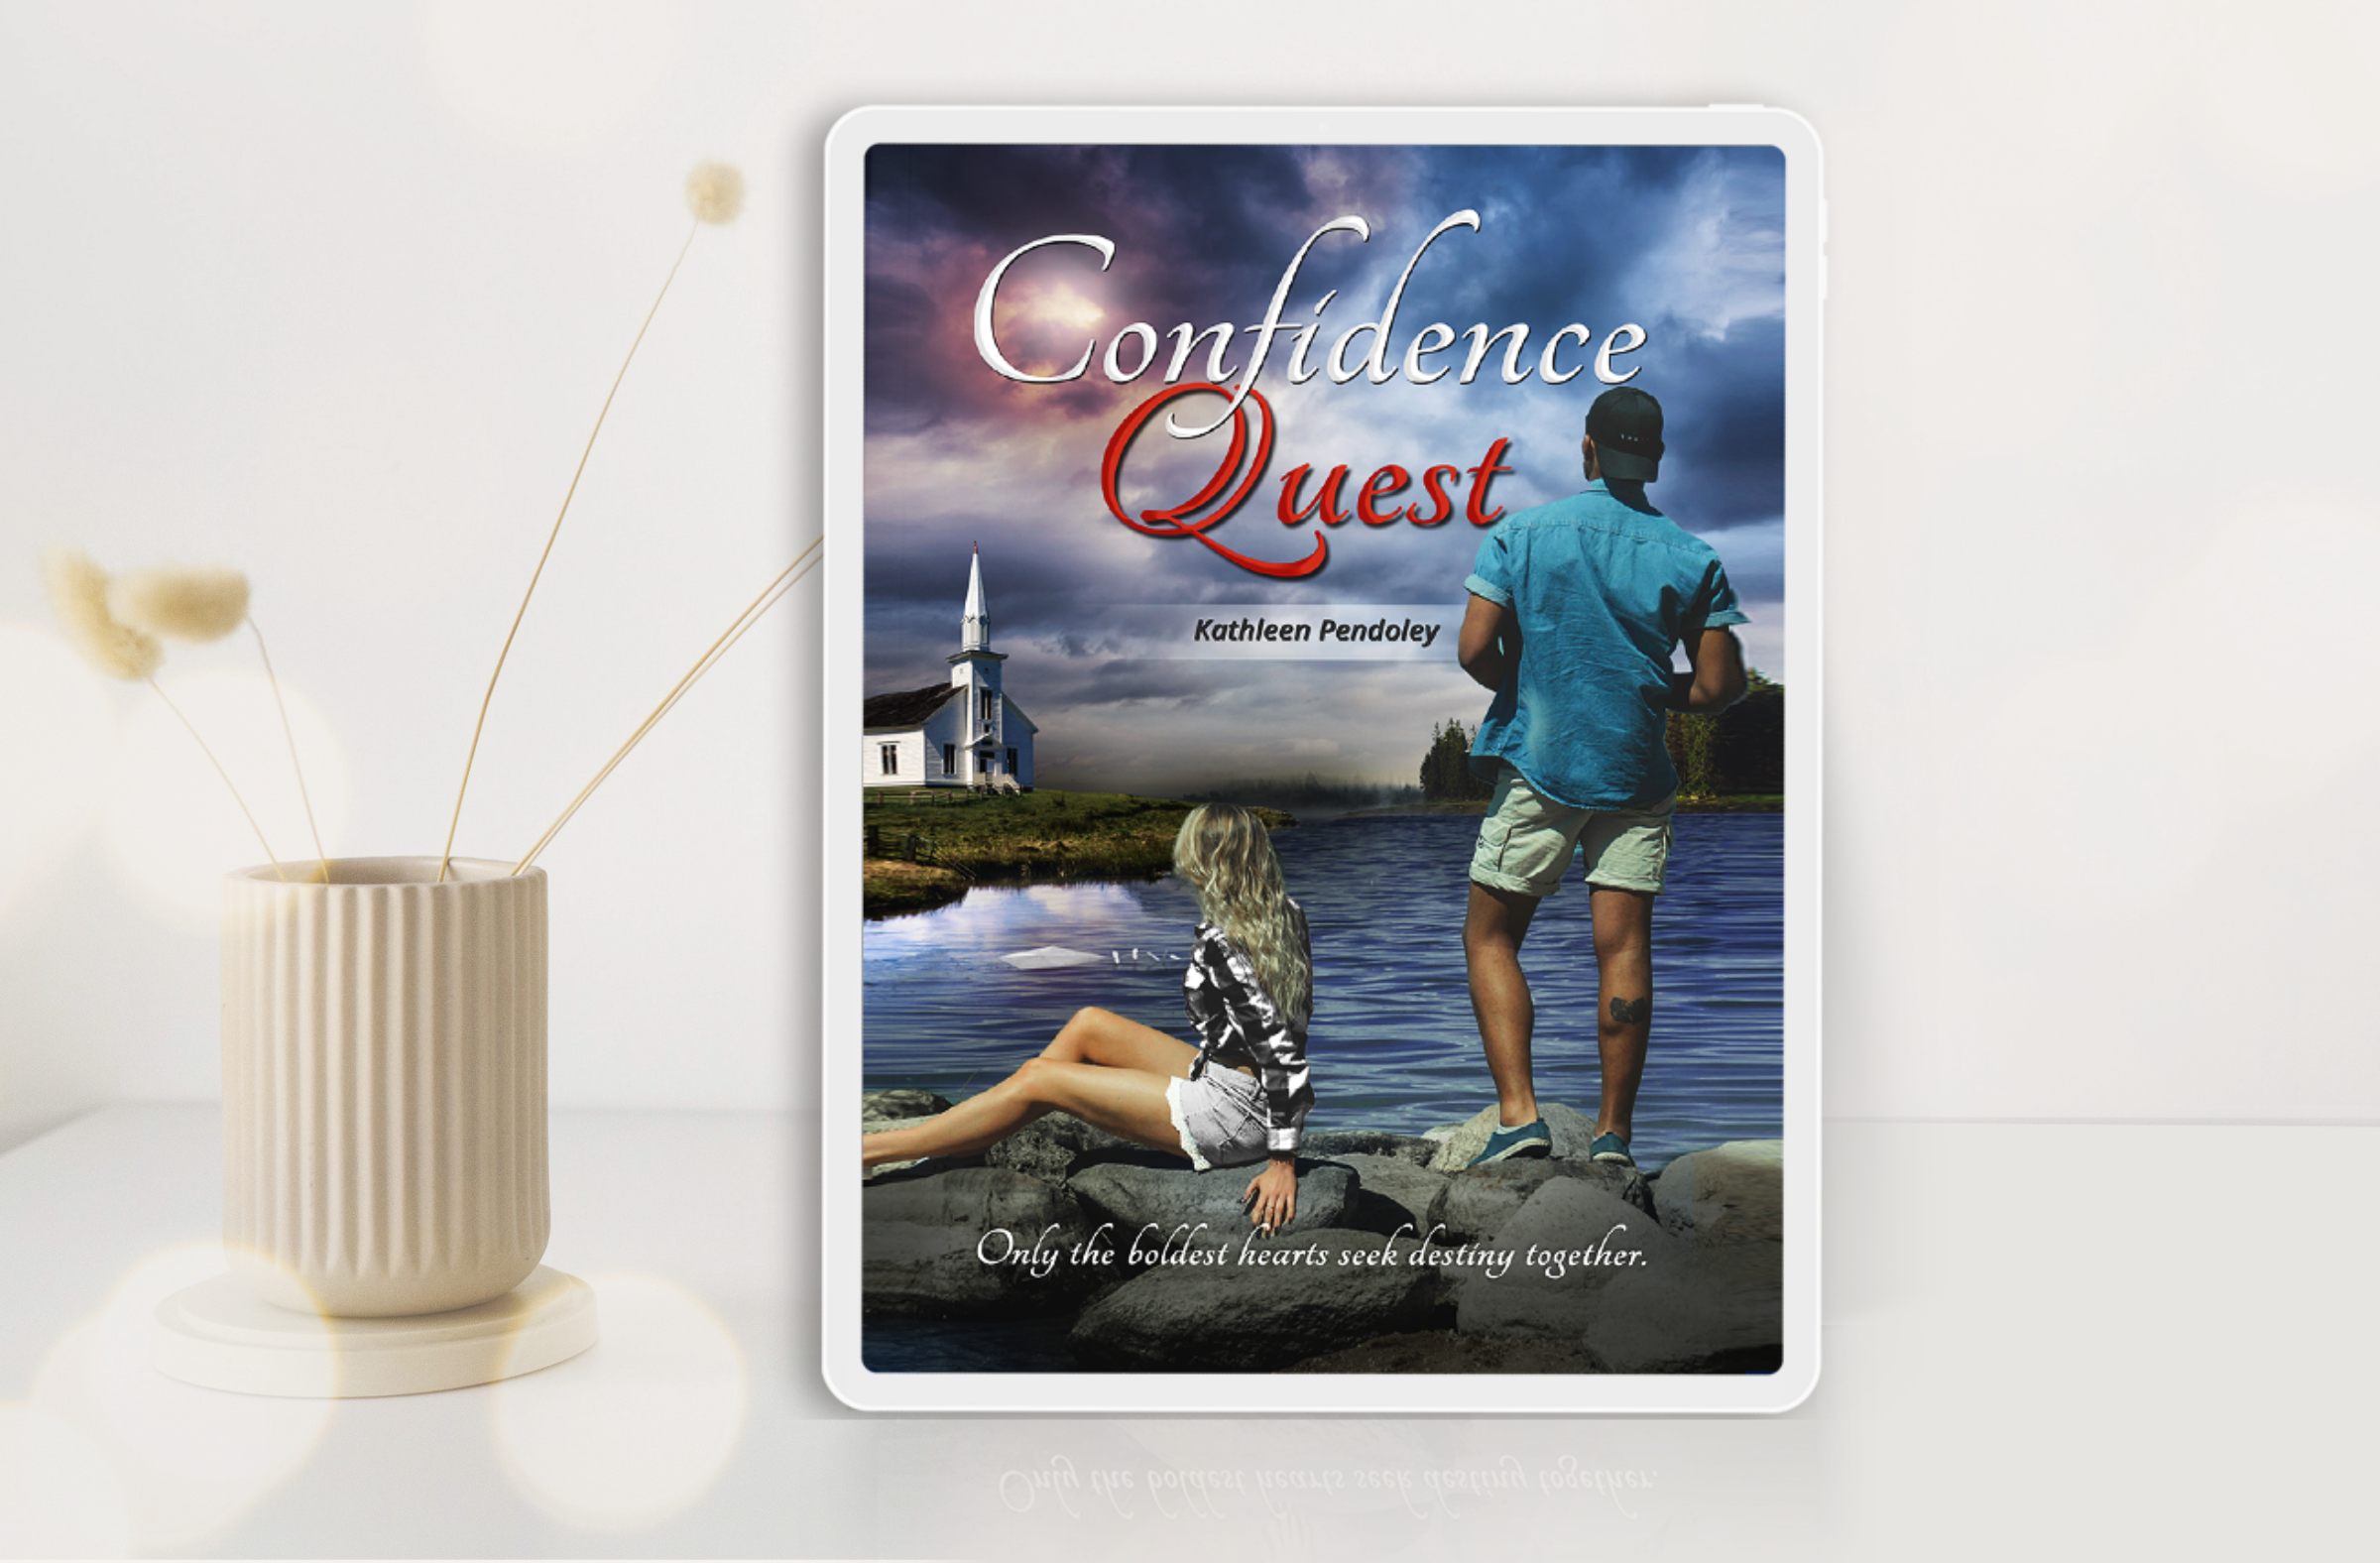 Confidence Quest romance novel by Kathleen Pendoley